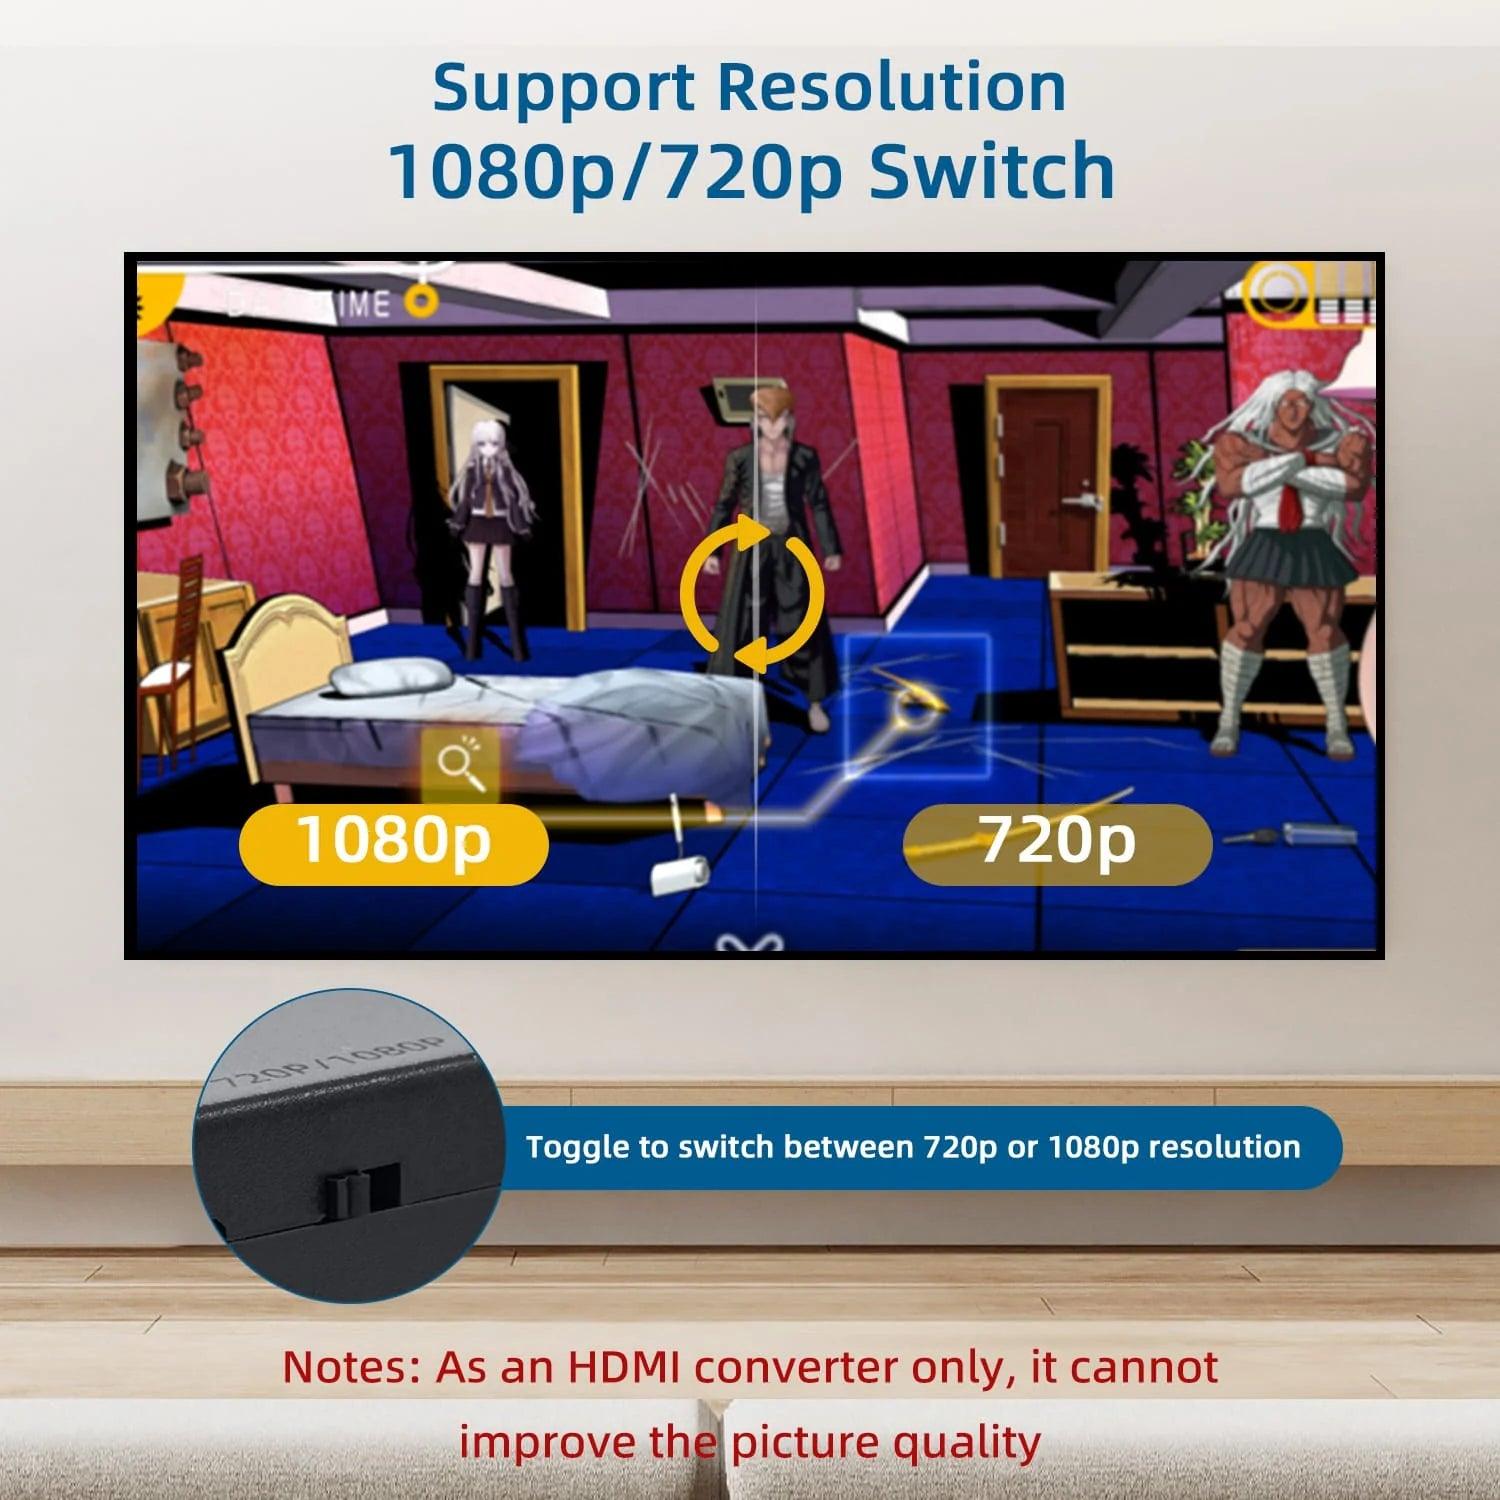 HDTV HDMI Adapter for PlayStation PSP 2000/3000 - RetroGaming.no